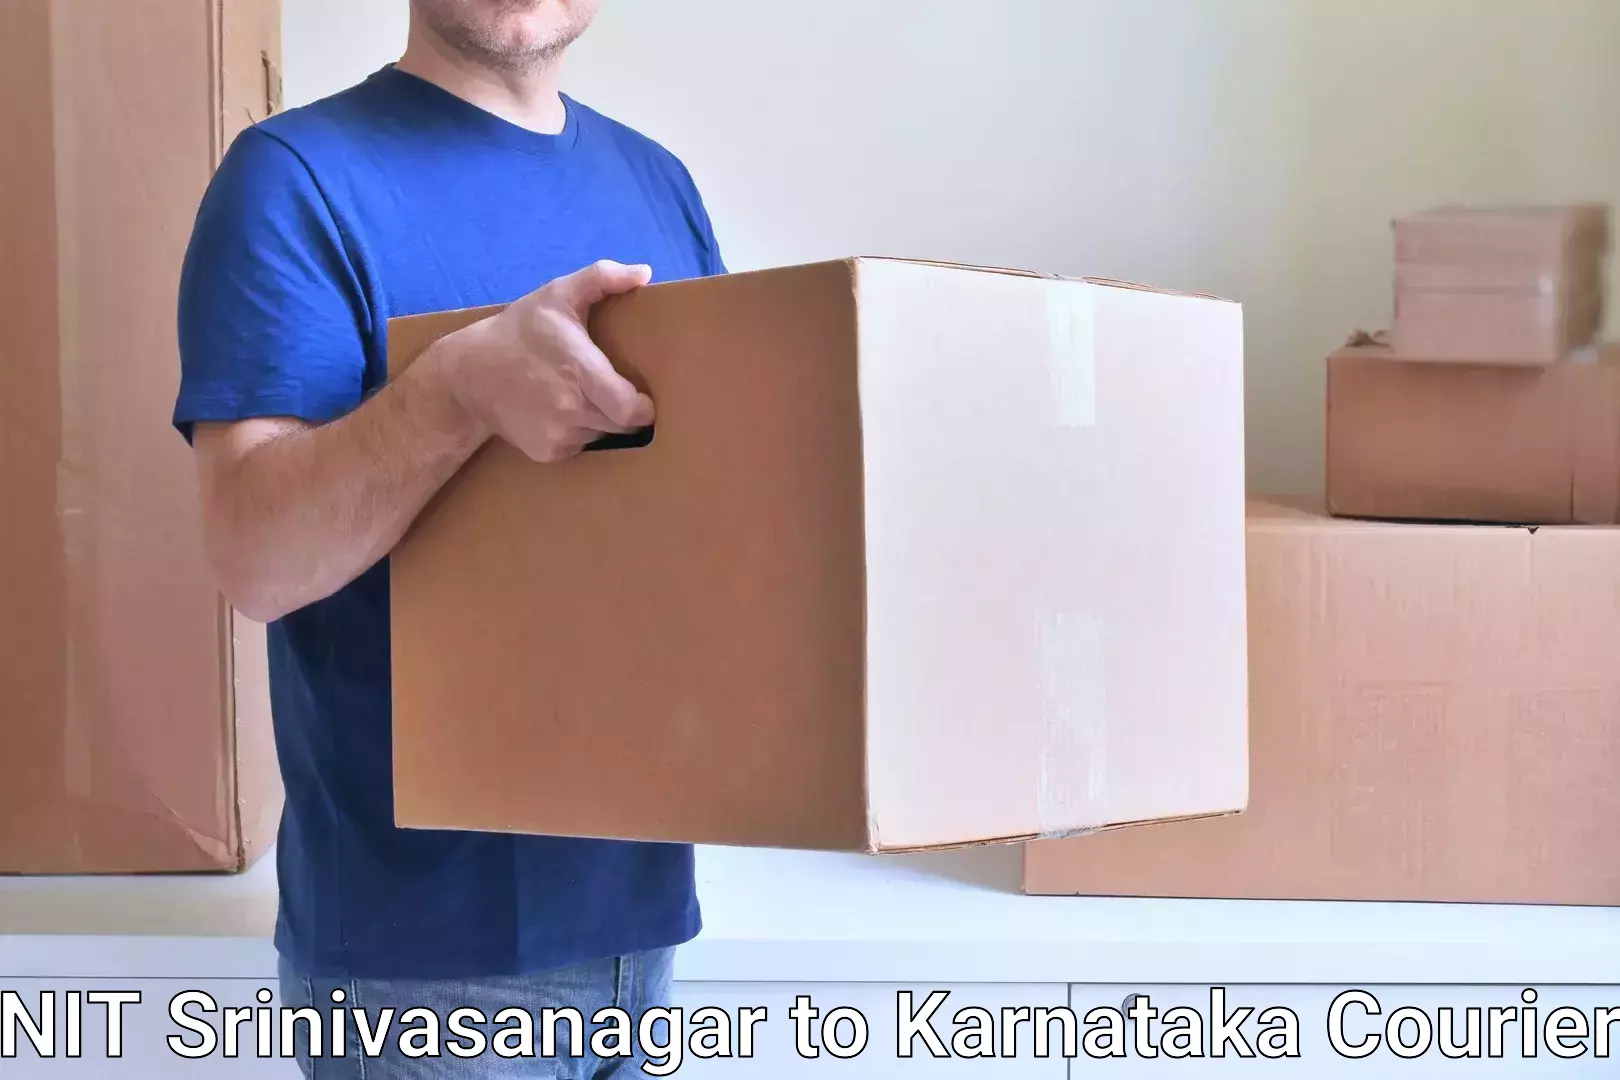 Cargo delivery service NIT Srinivasanagar to Kalaburagi